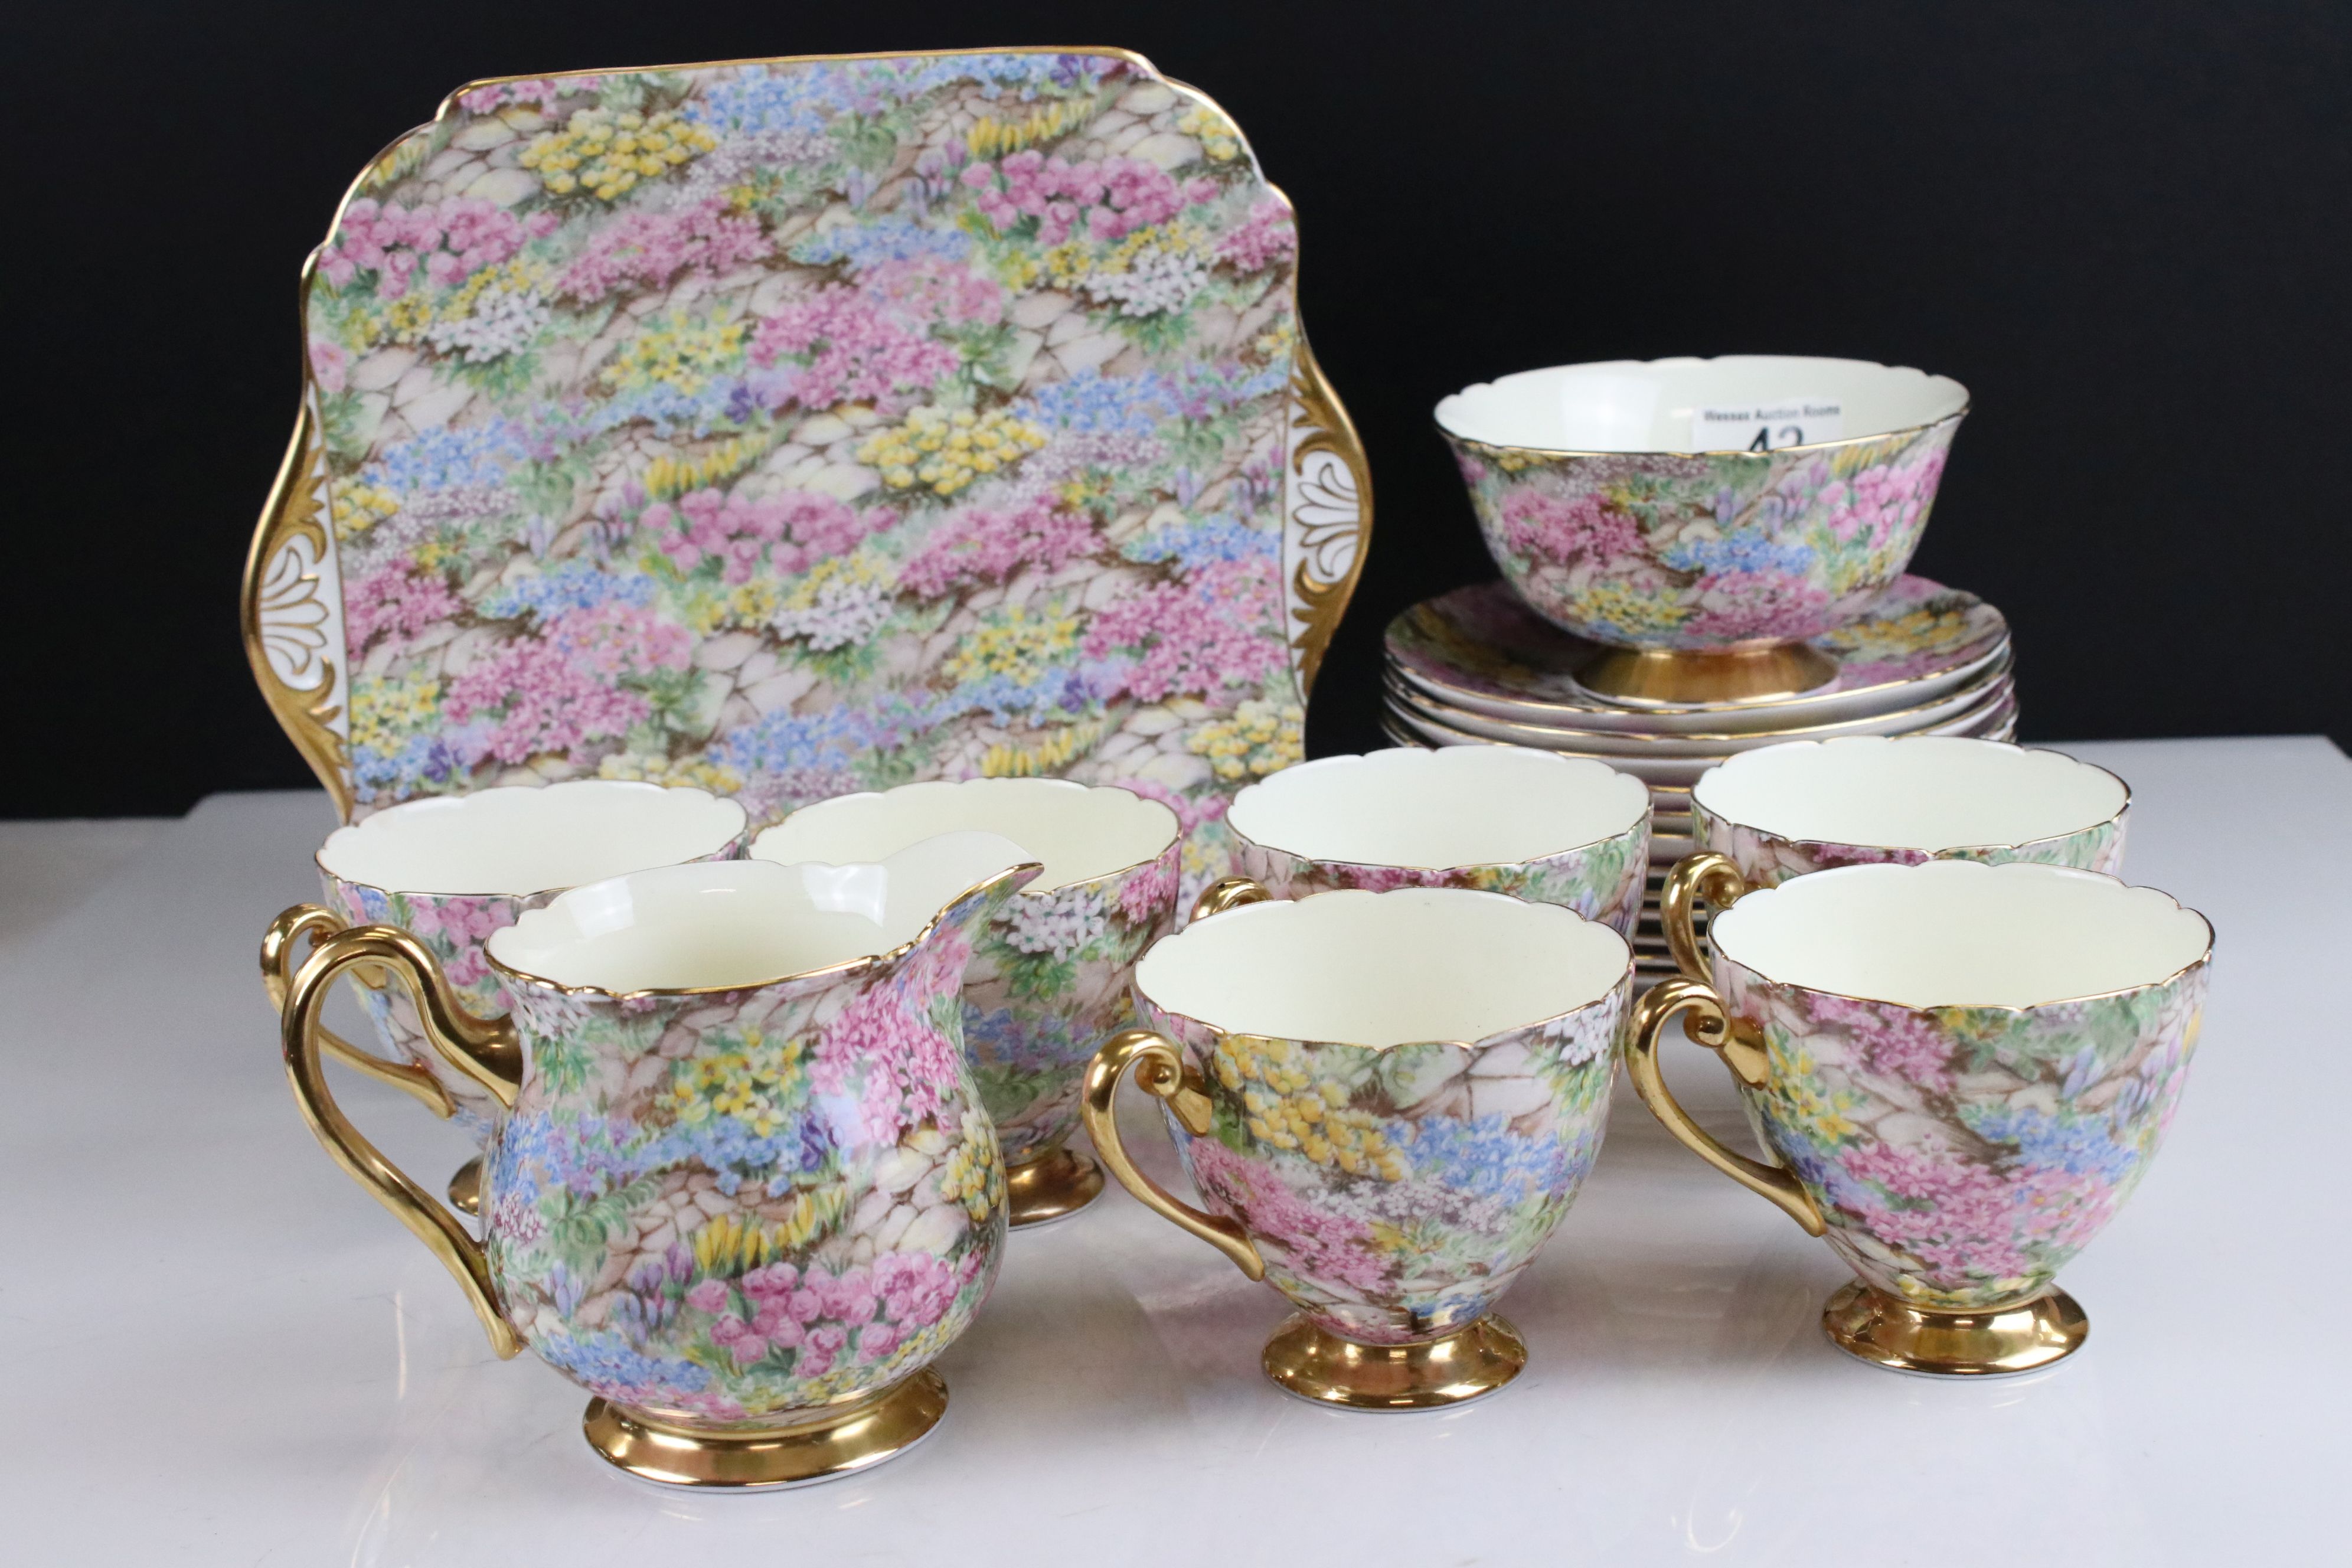 Shelley Rock Garden Tea Set comprising Six Cups, Saucers and Tea Plates plus Milk Jug, Sugar Bowl